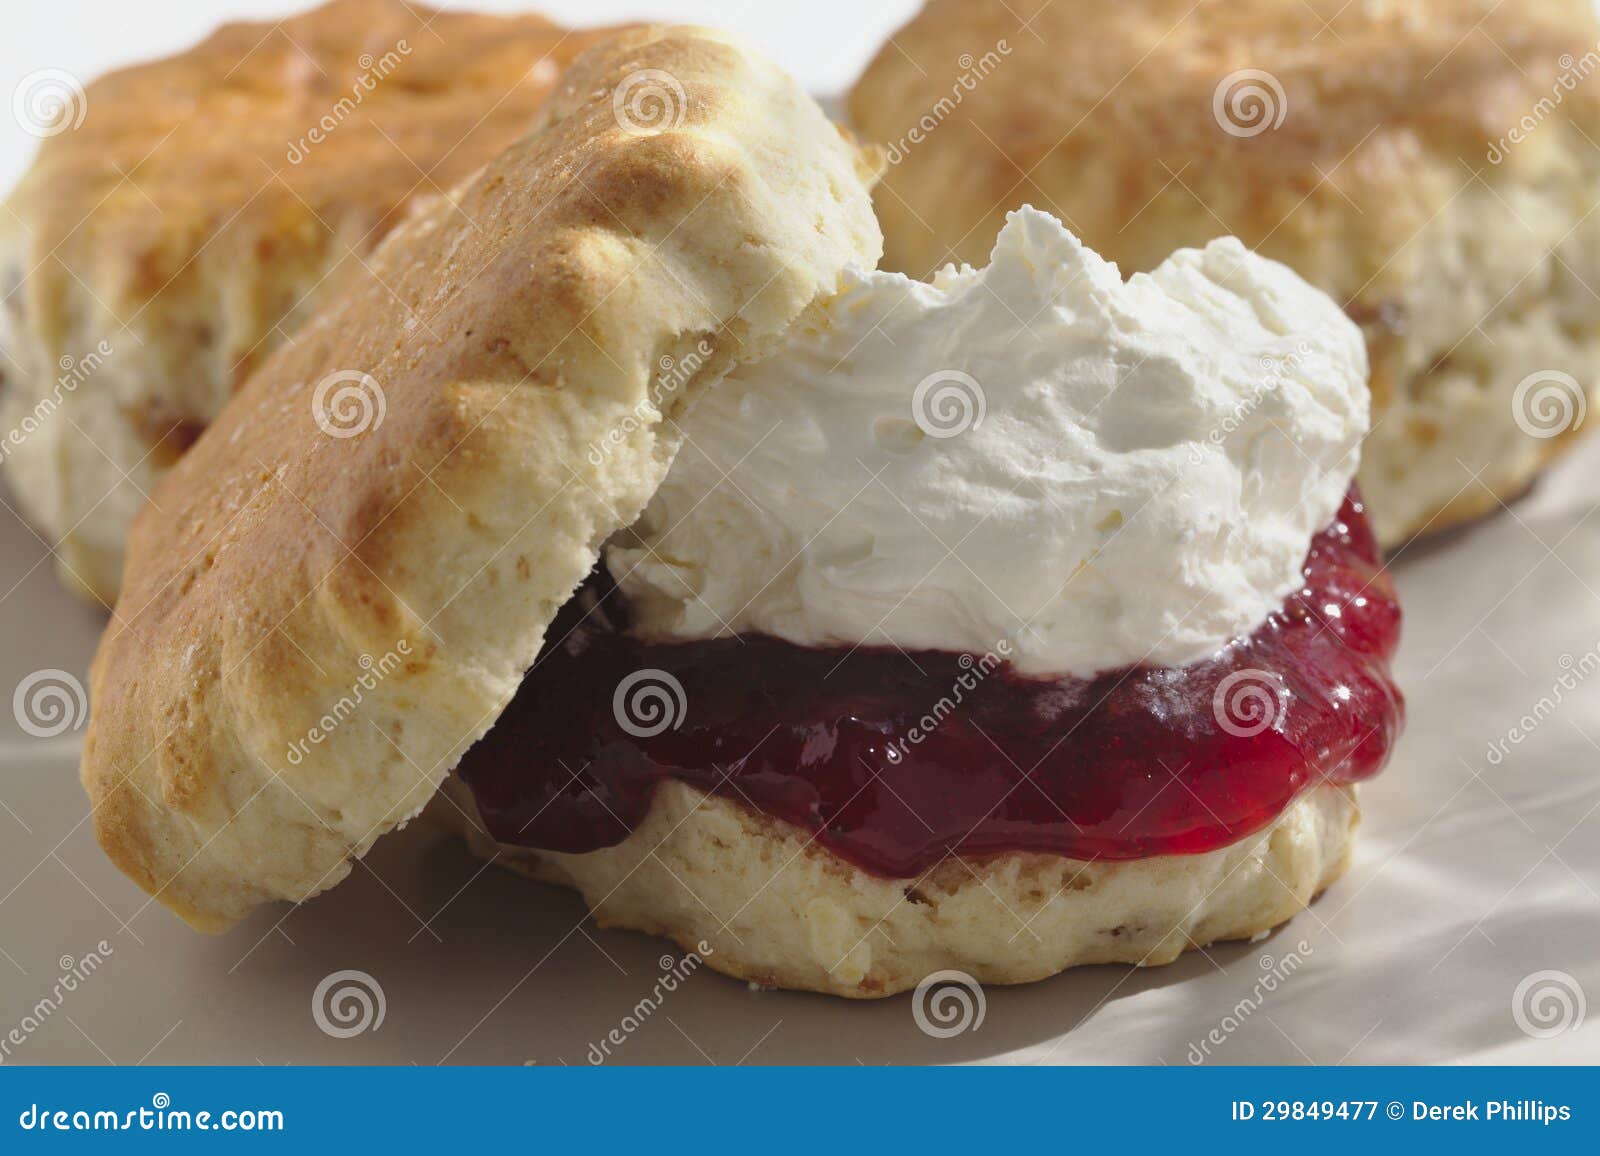 cornish scone with cream and jam